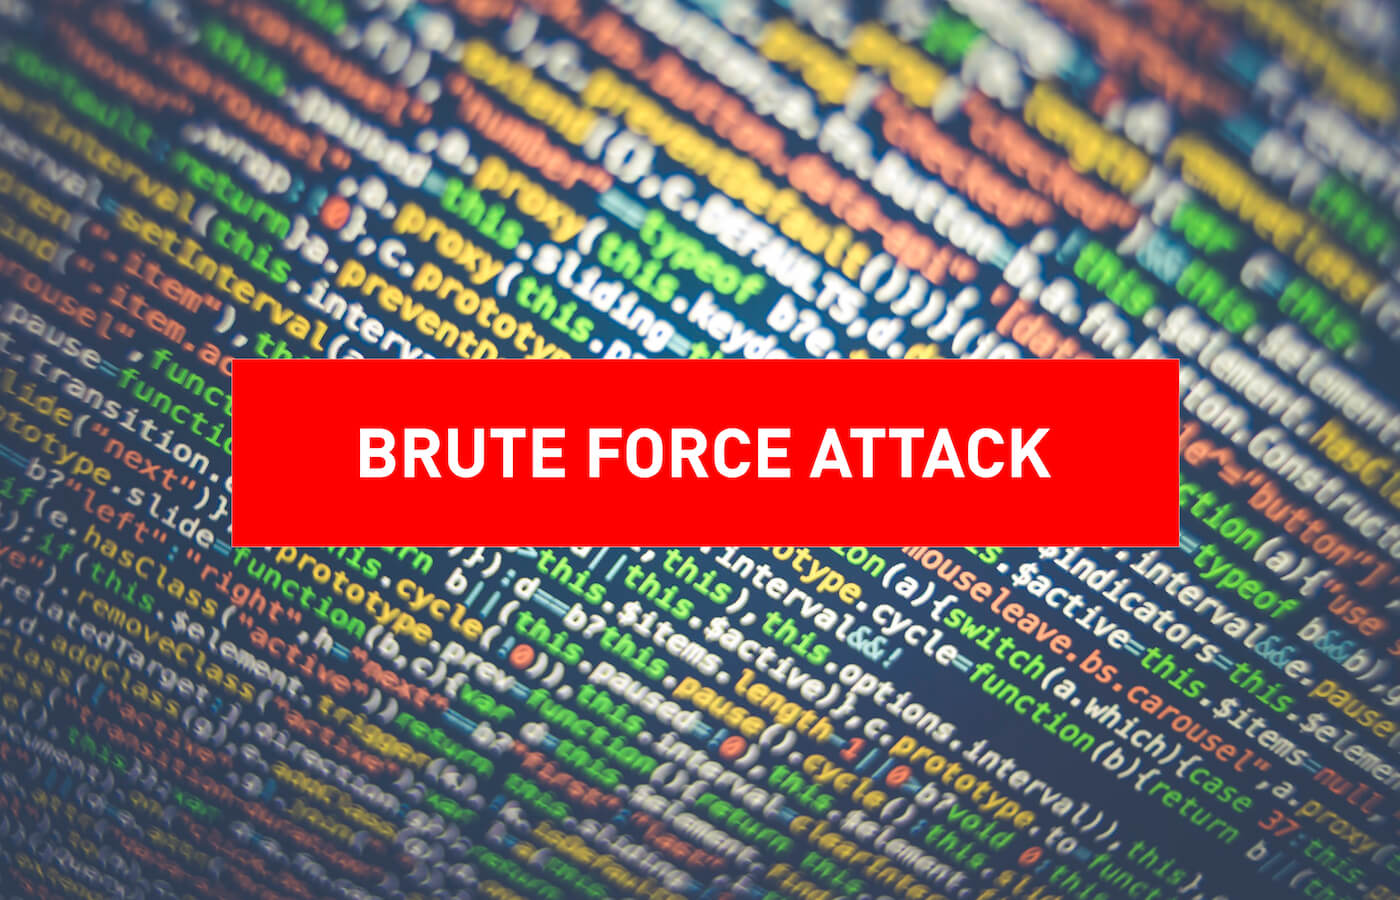 Brute force attack